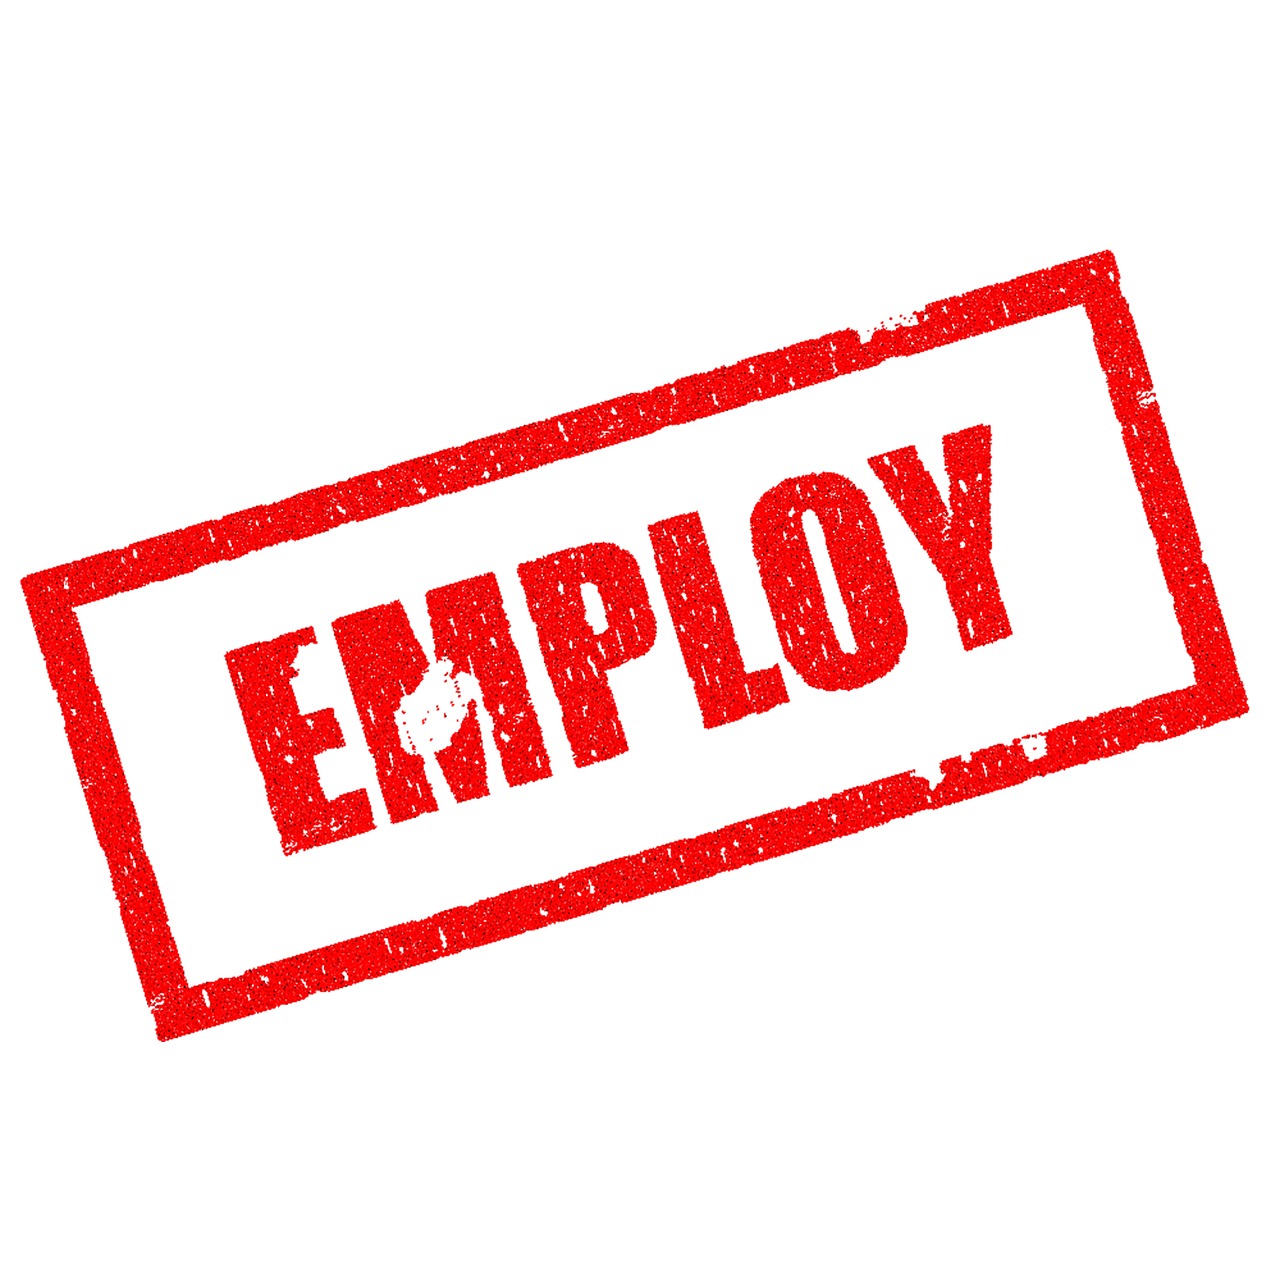 employ job recruitment free photo